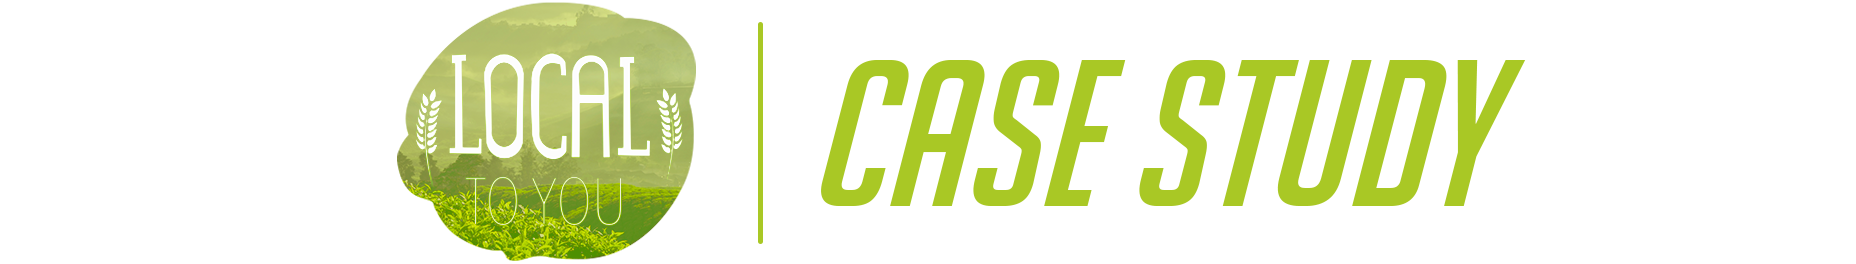 SC-LTY-Case-Study-Logo3